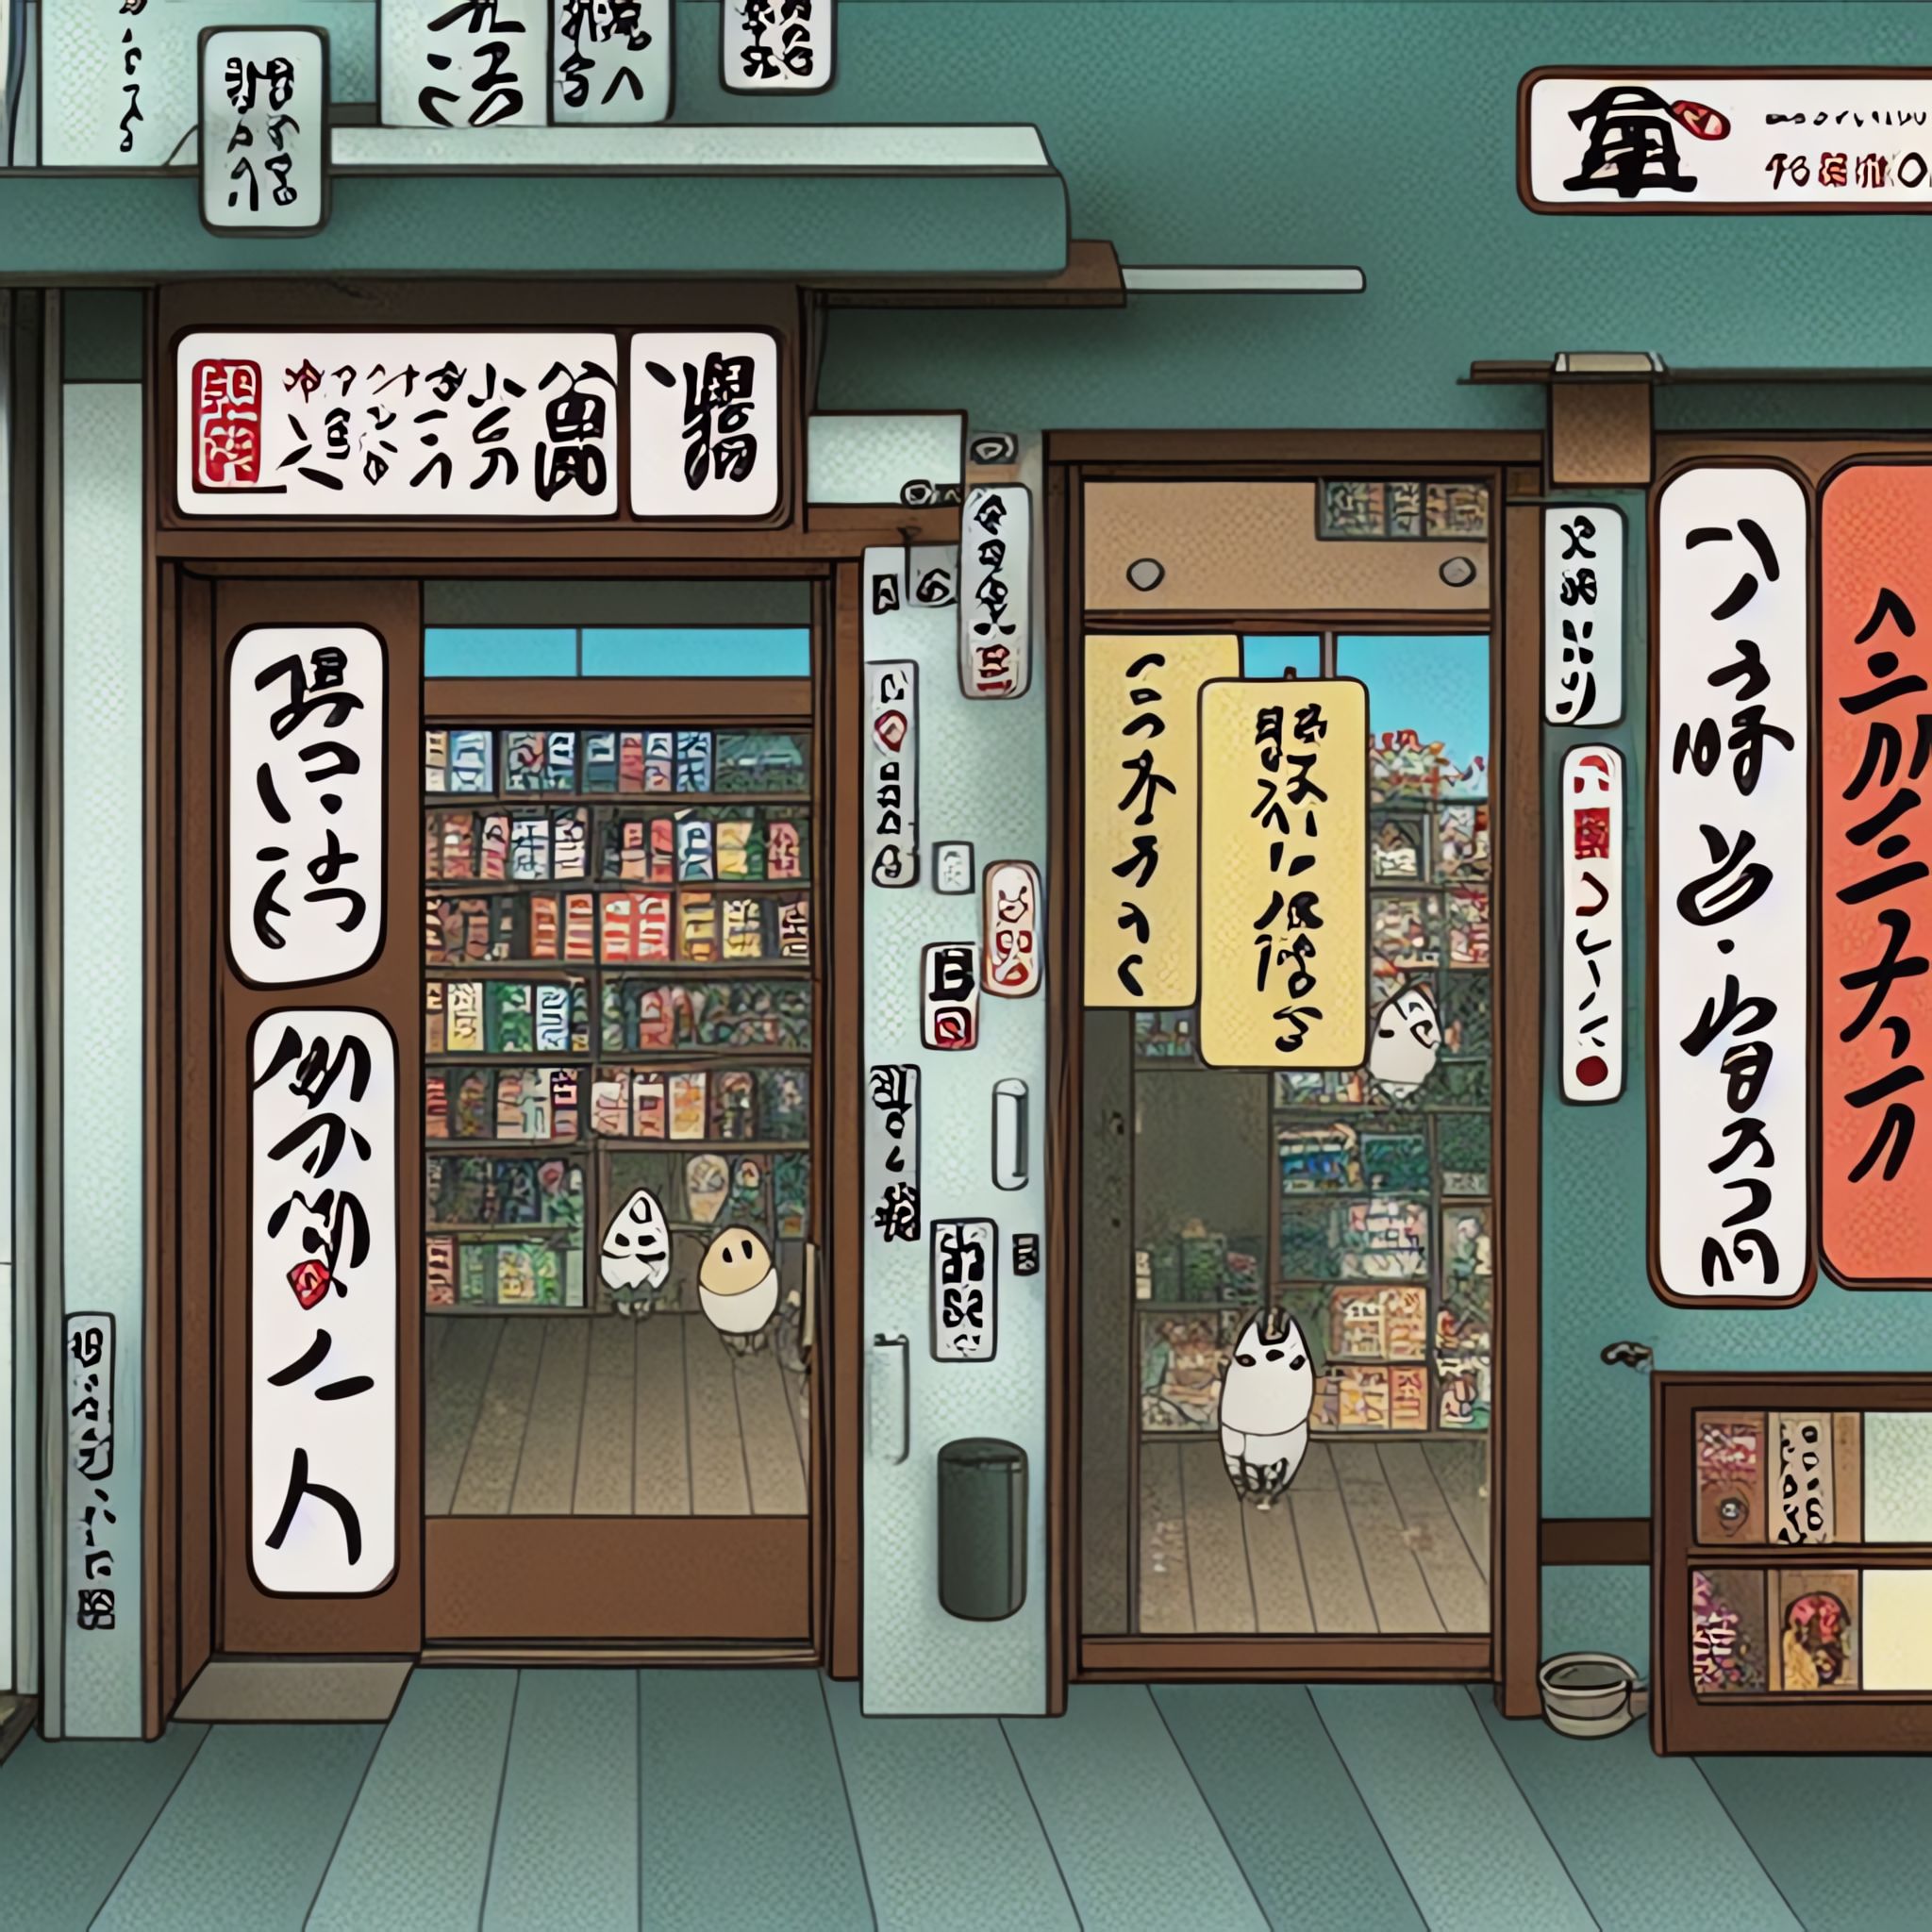 Door-of-a-Japanese-convenience-store-wide-shot-Studio-Ghibli-Hayao-Miyazaki-i9fv